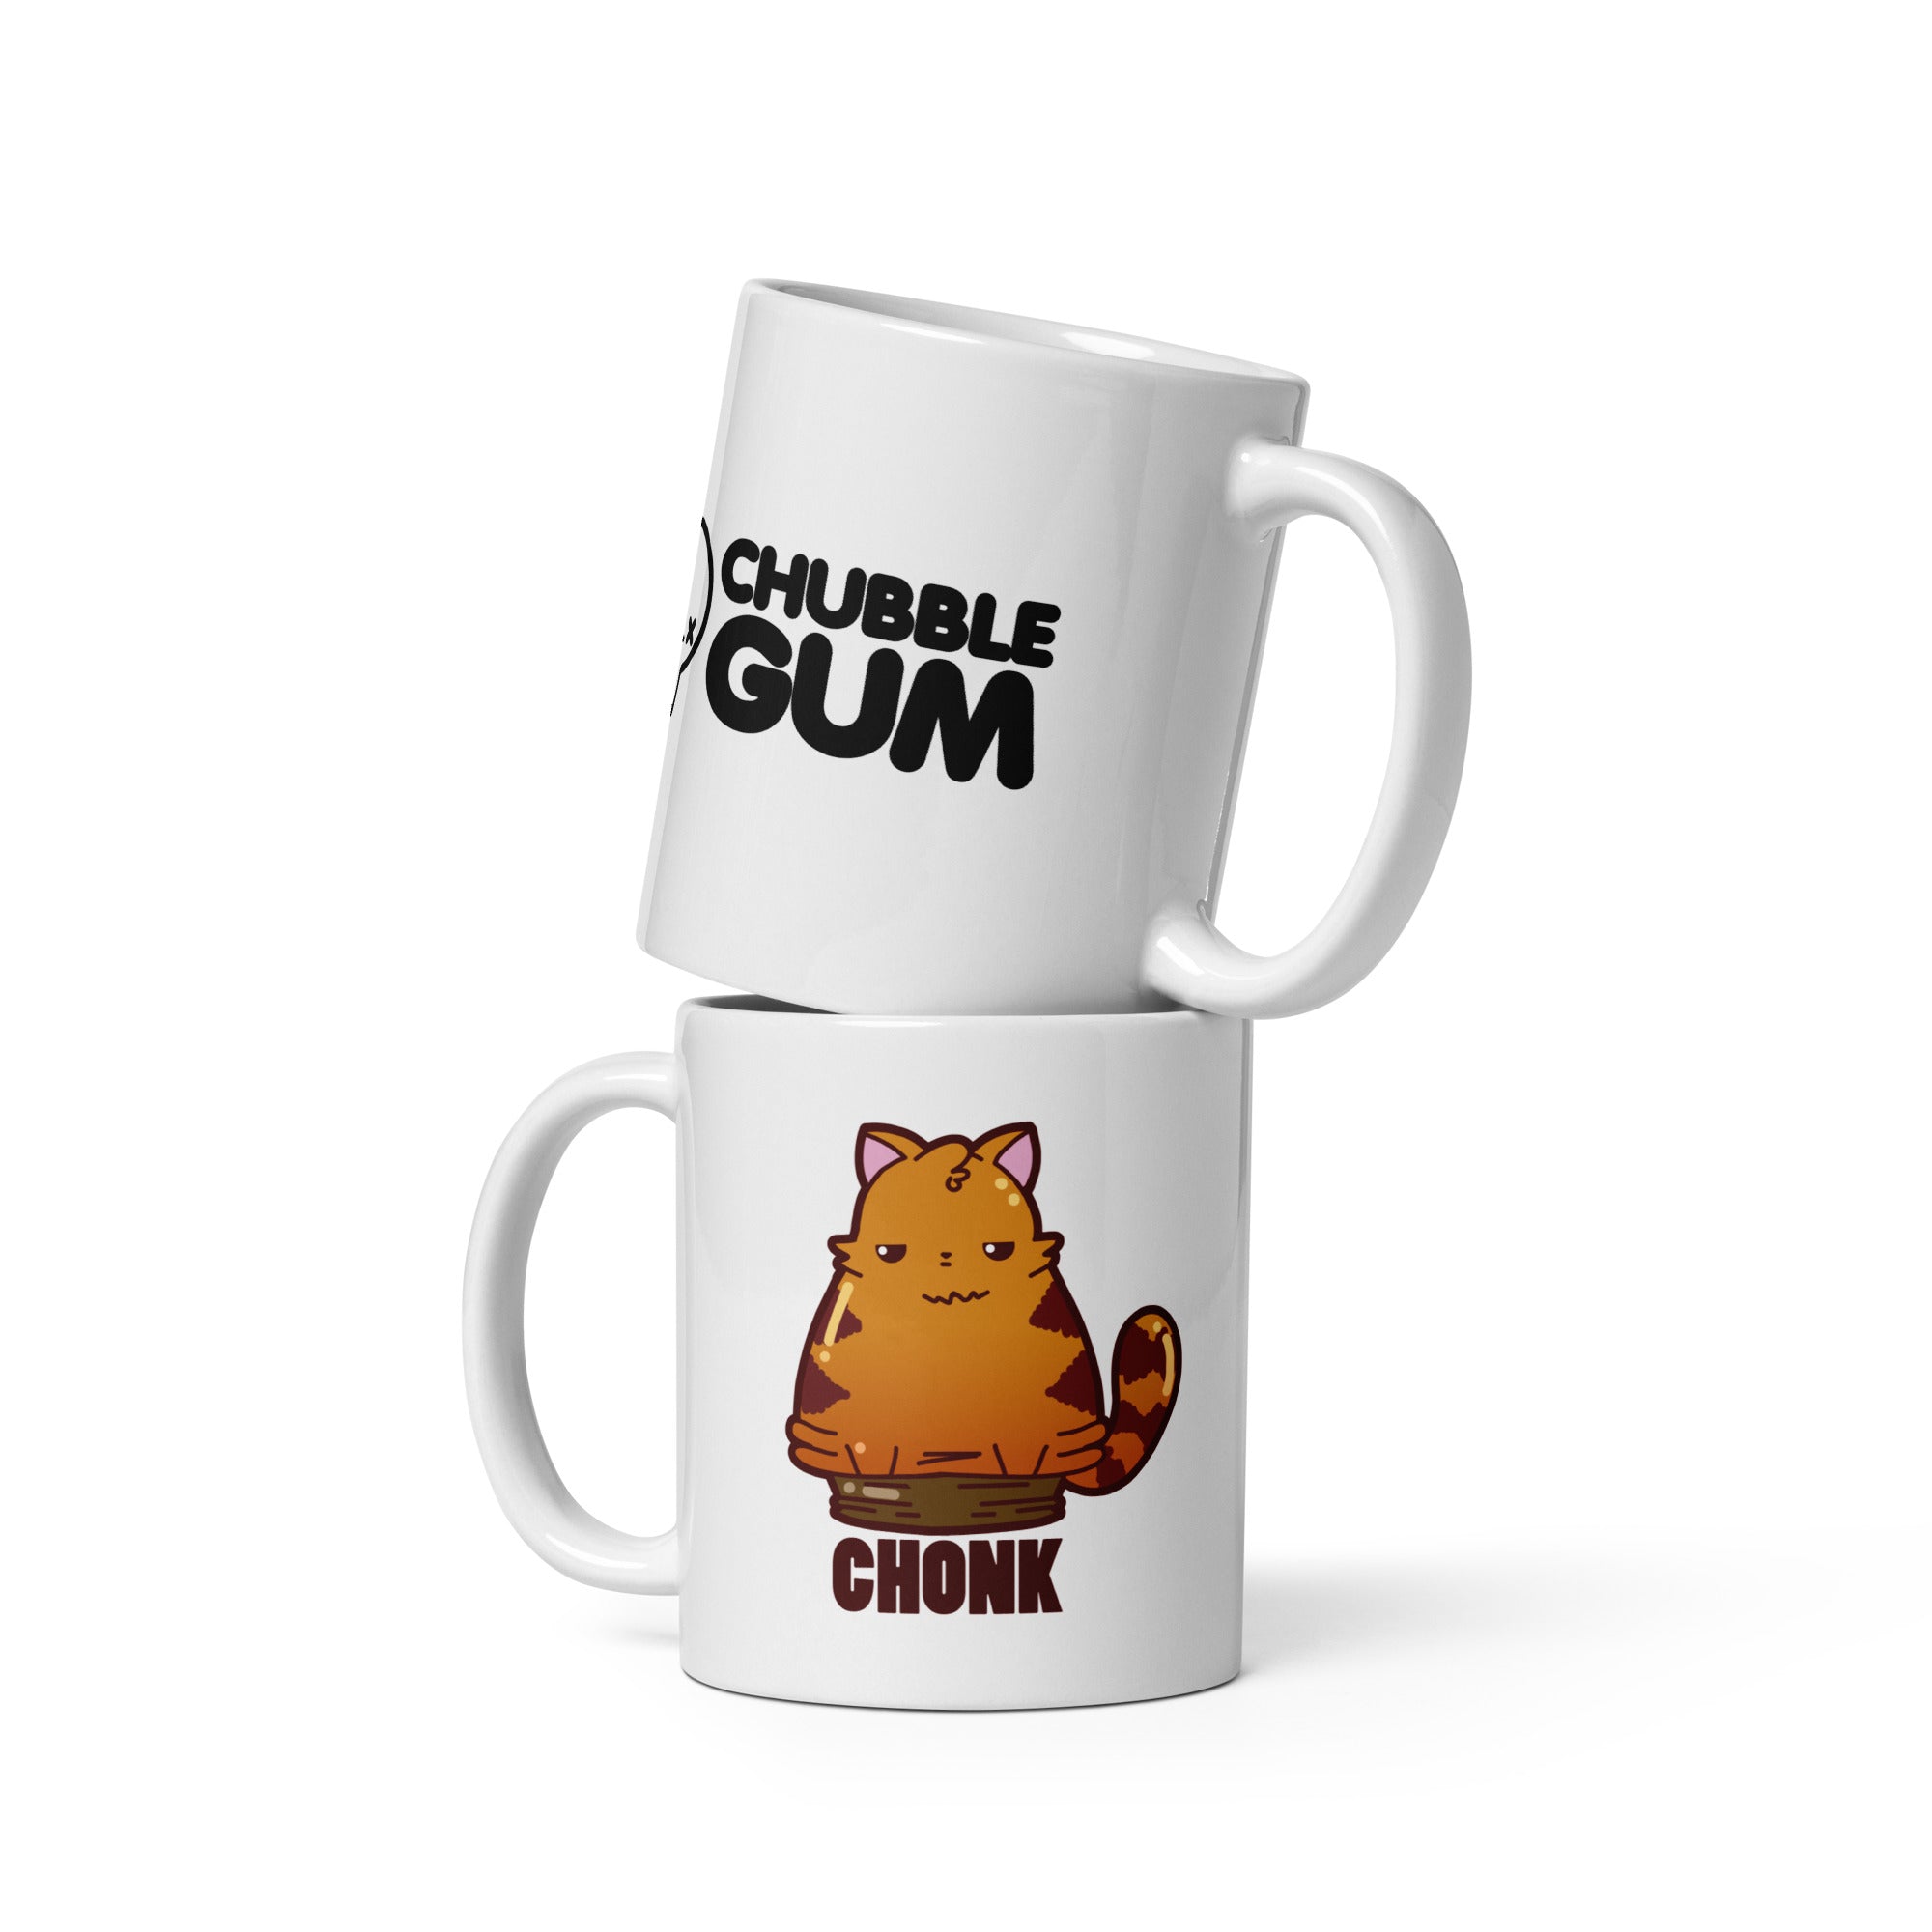 CHONK - Coffee Mug - ChubbleGumLLC